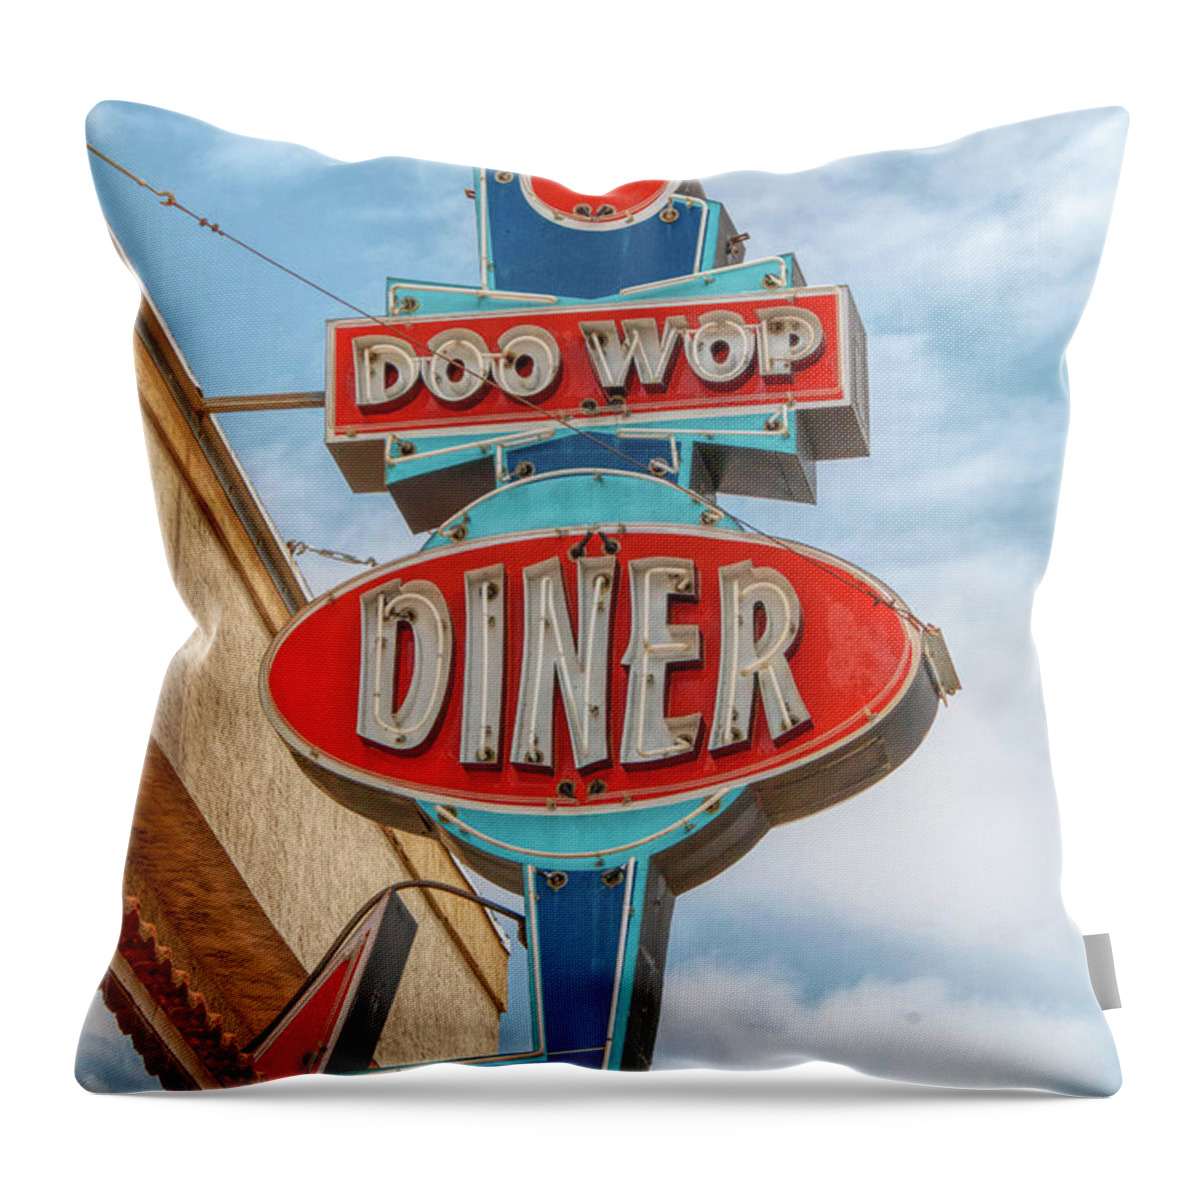 Wildwood Throw Pillow featuring the photograph Doo Wop Diner Wildwood by Kristia Adams